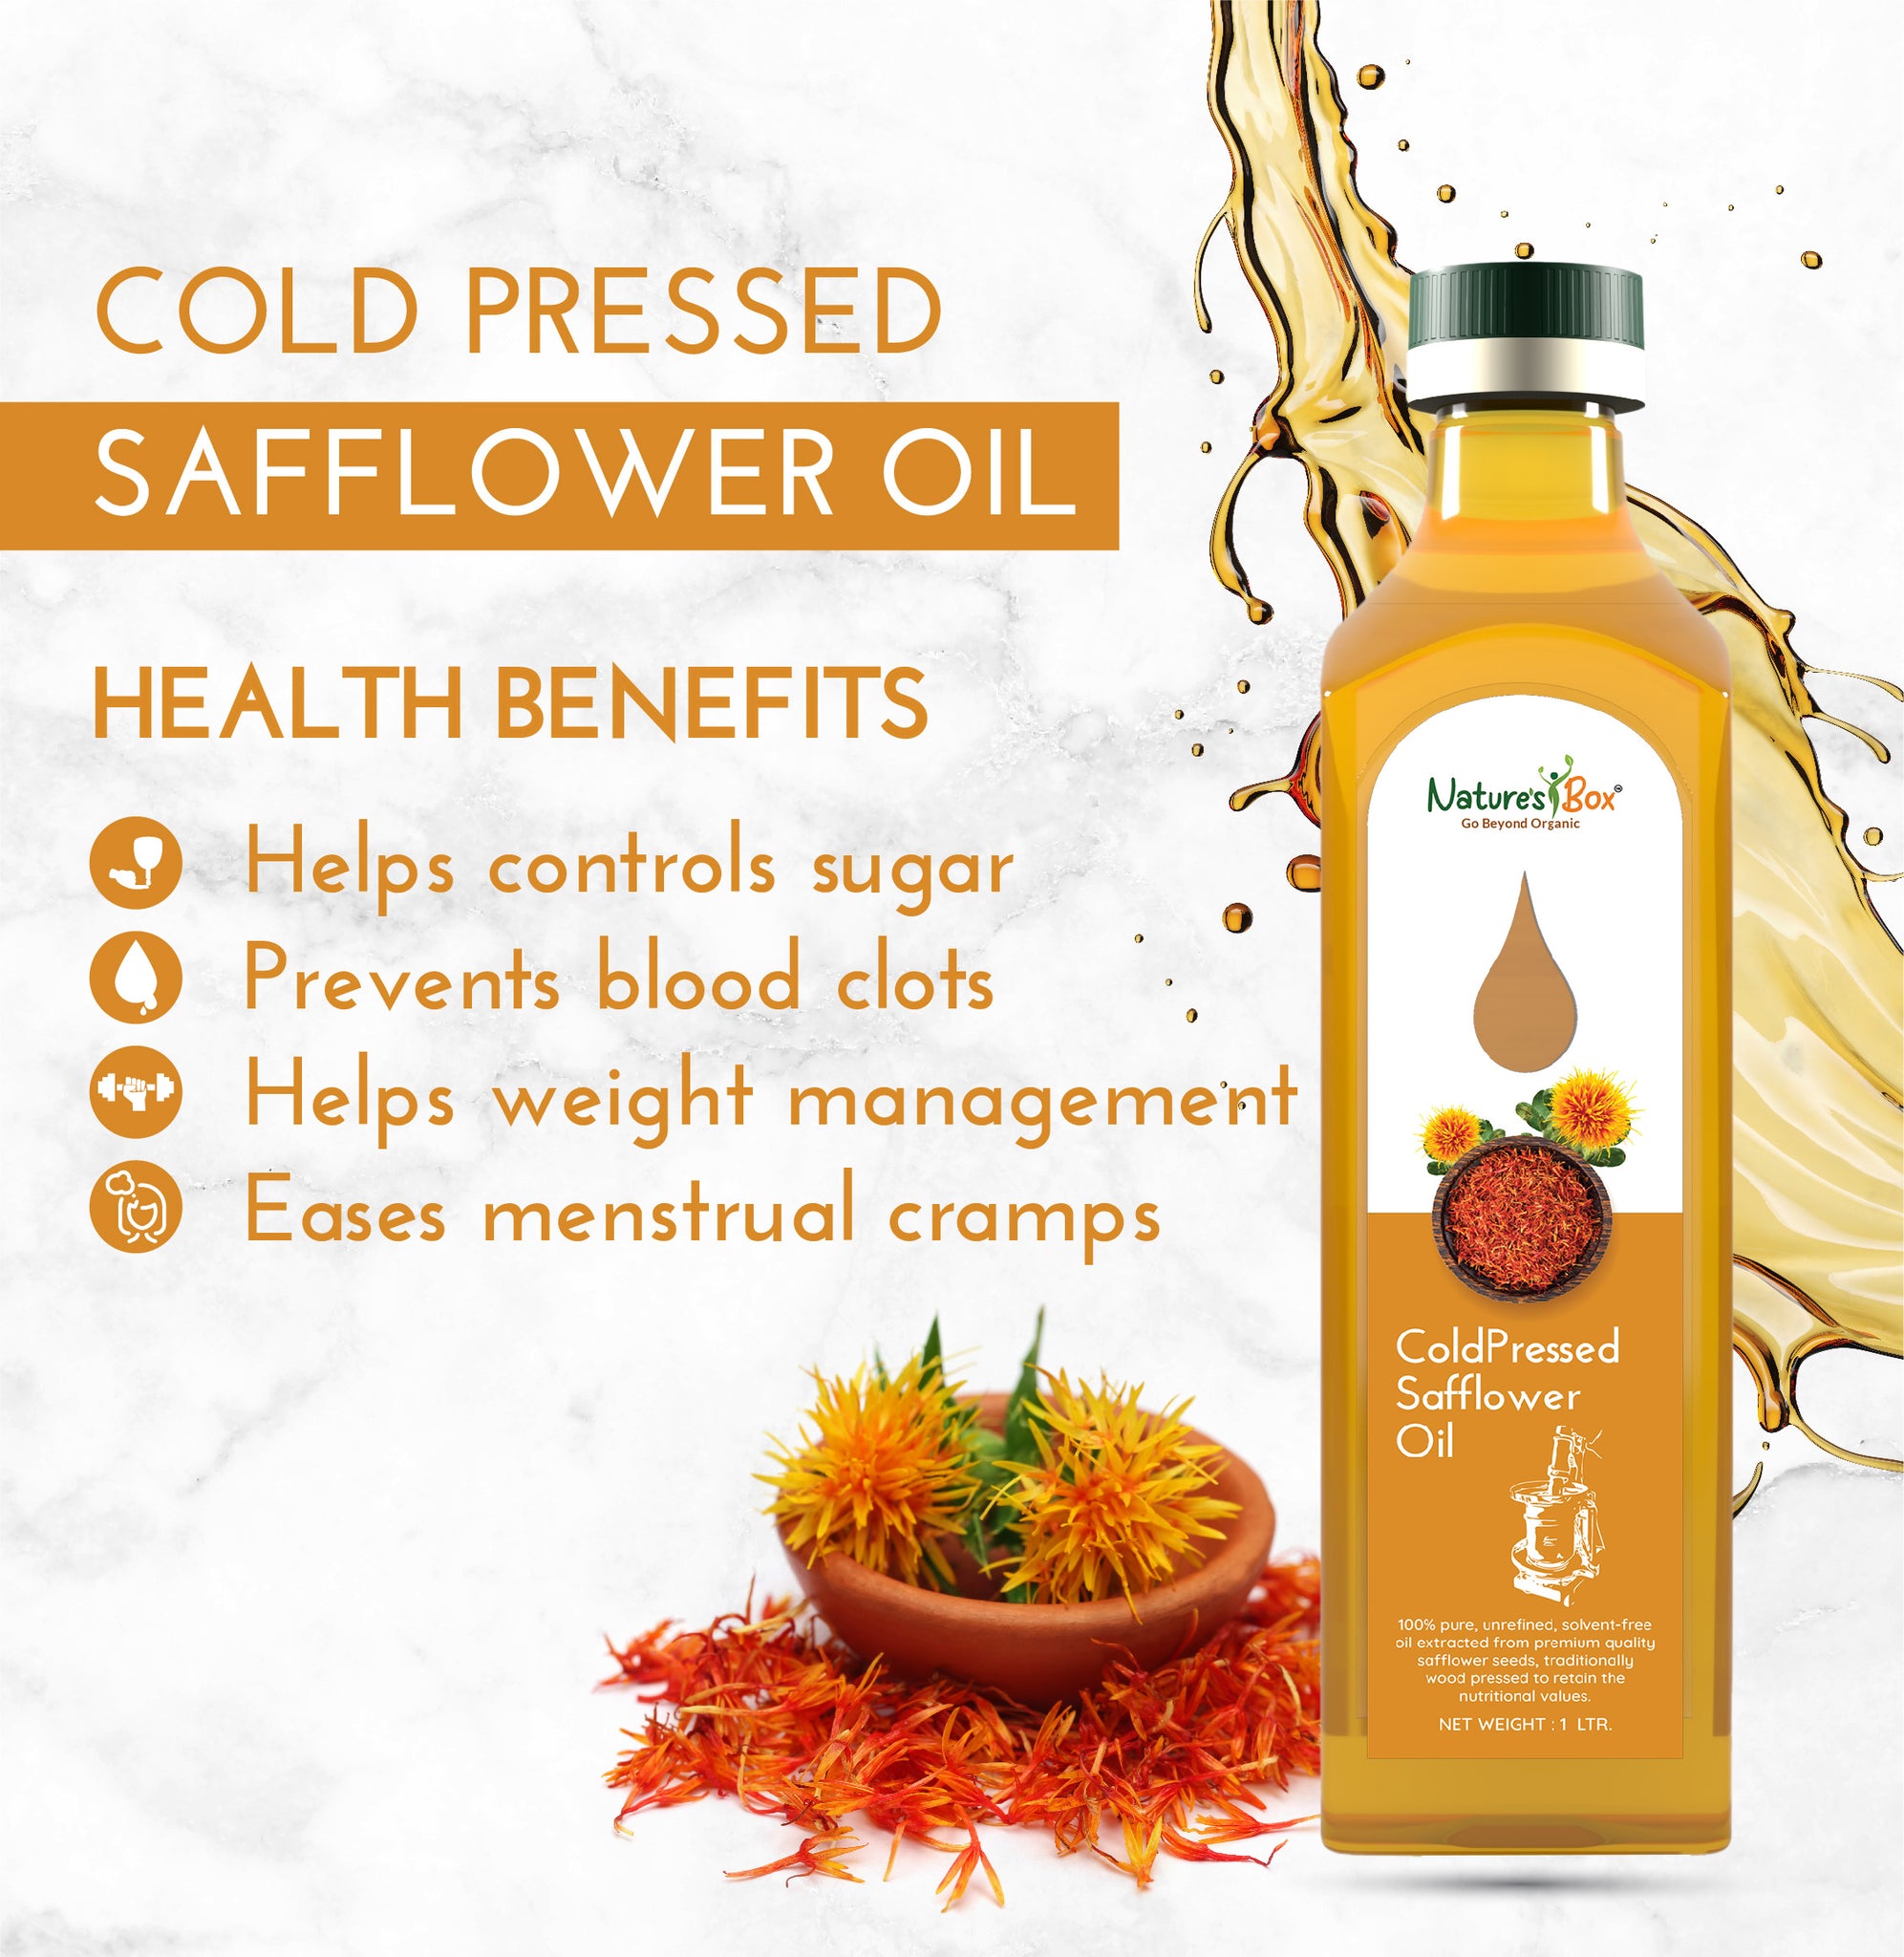 Wood Cold Pressed Safflower Oil – Tani Naturals